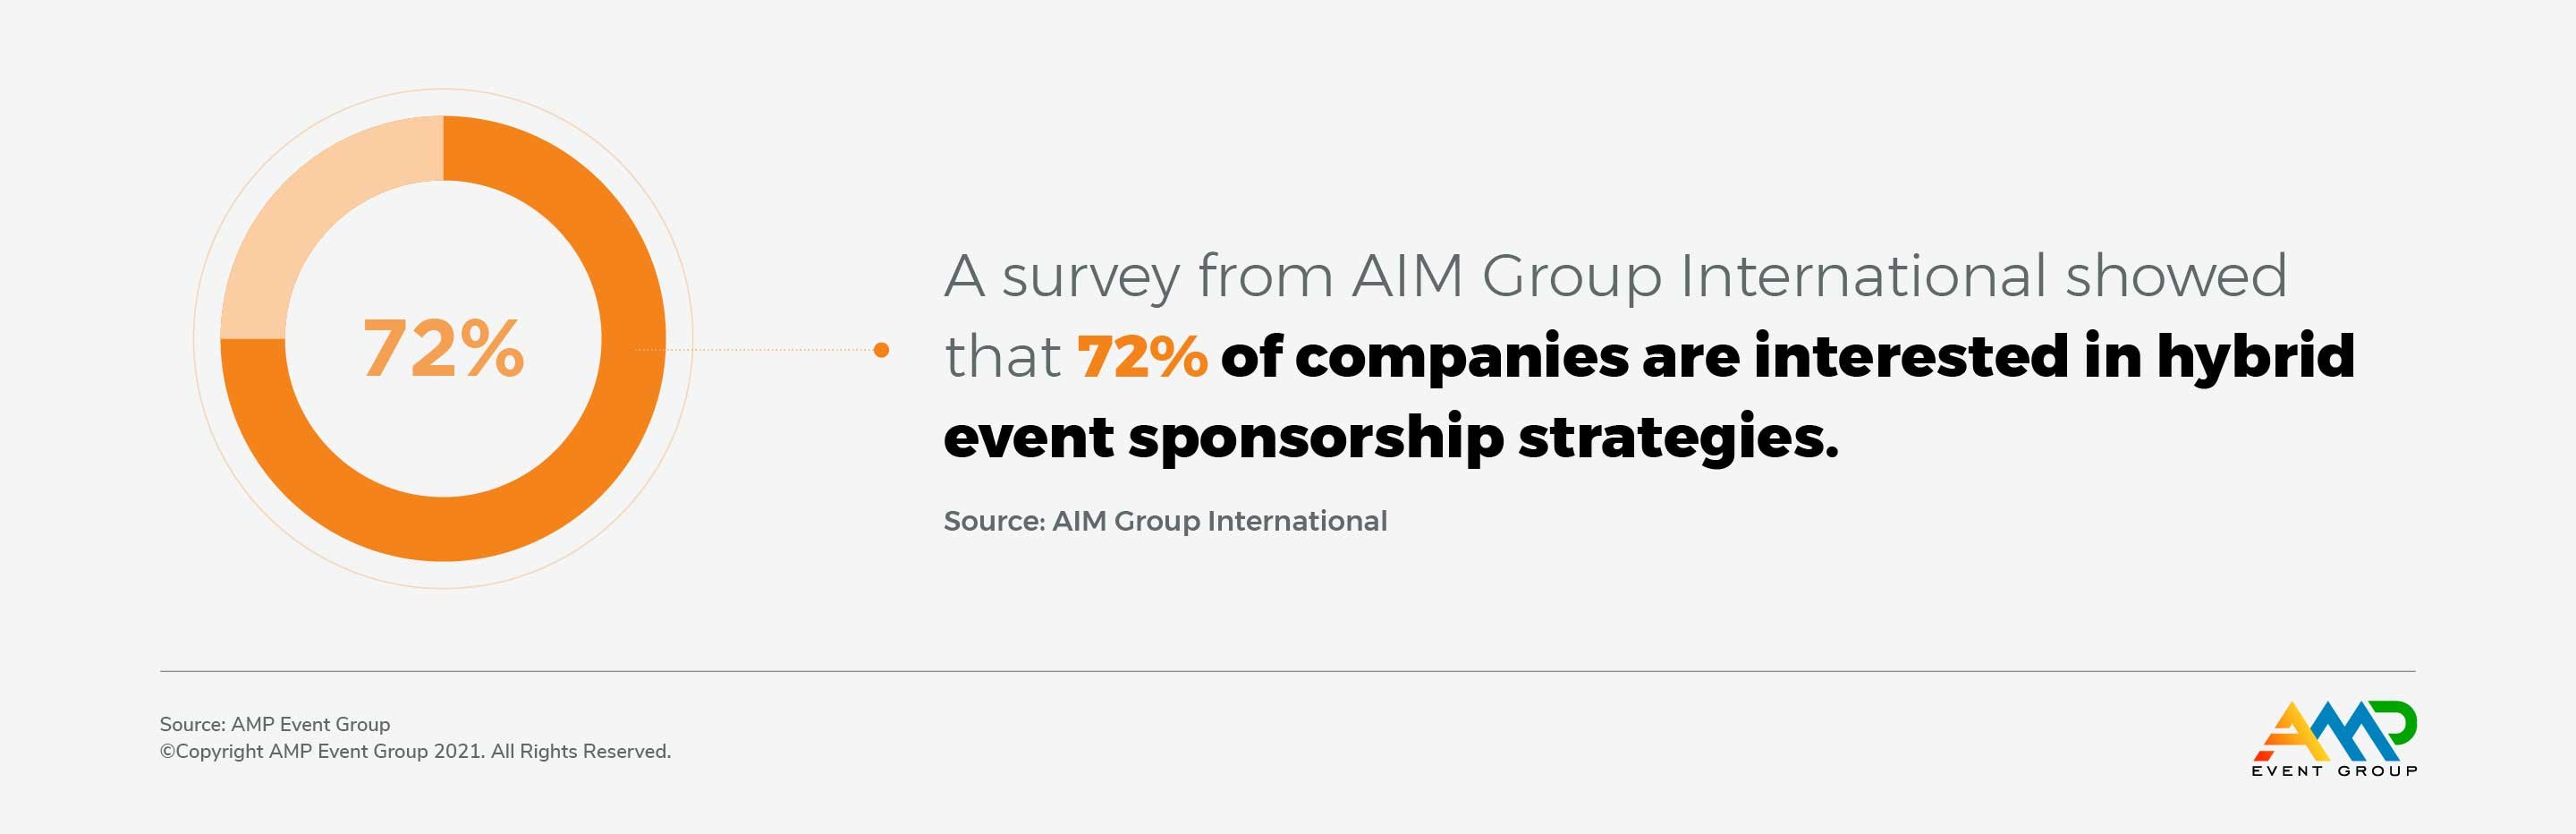 Amp Events: Hybrid Event Sponsorships - 72% companies in hybrid event sponsorship strategies 